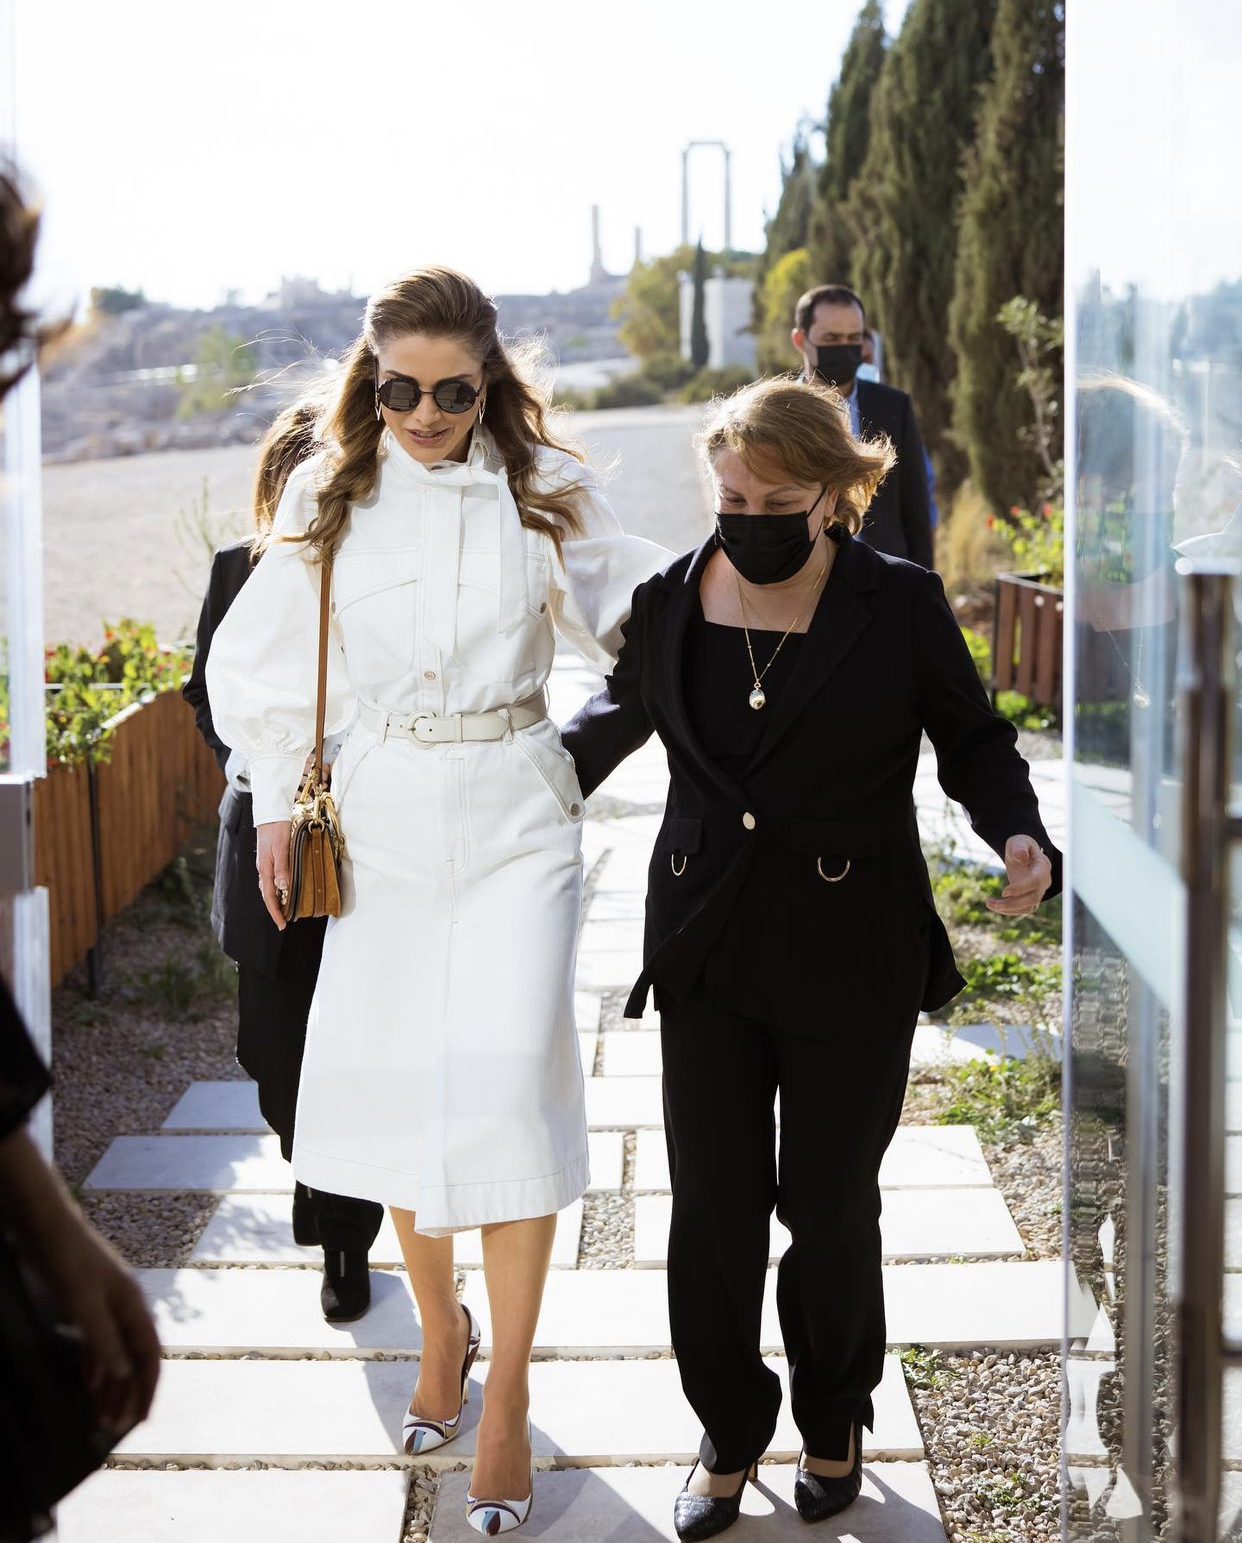 Queen Rania Owns This Top-Handle Louis Vuitton Bag